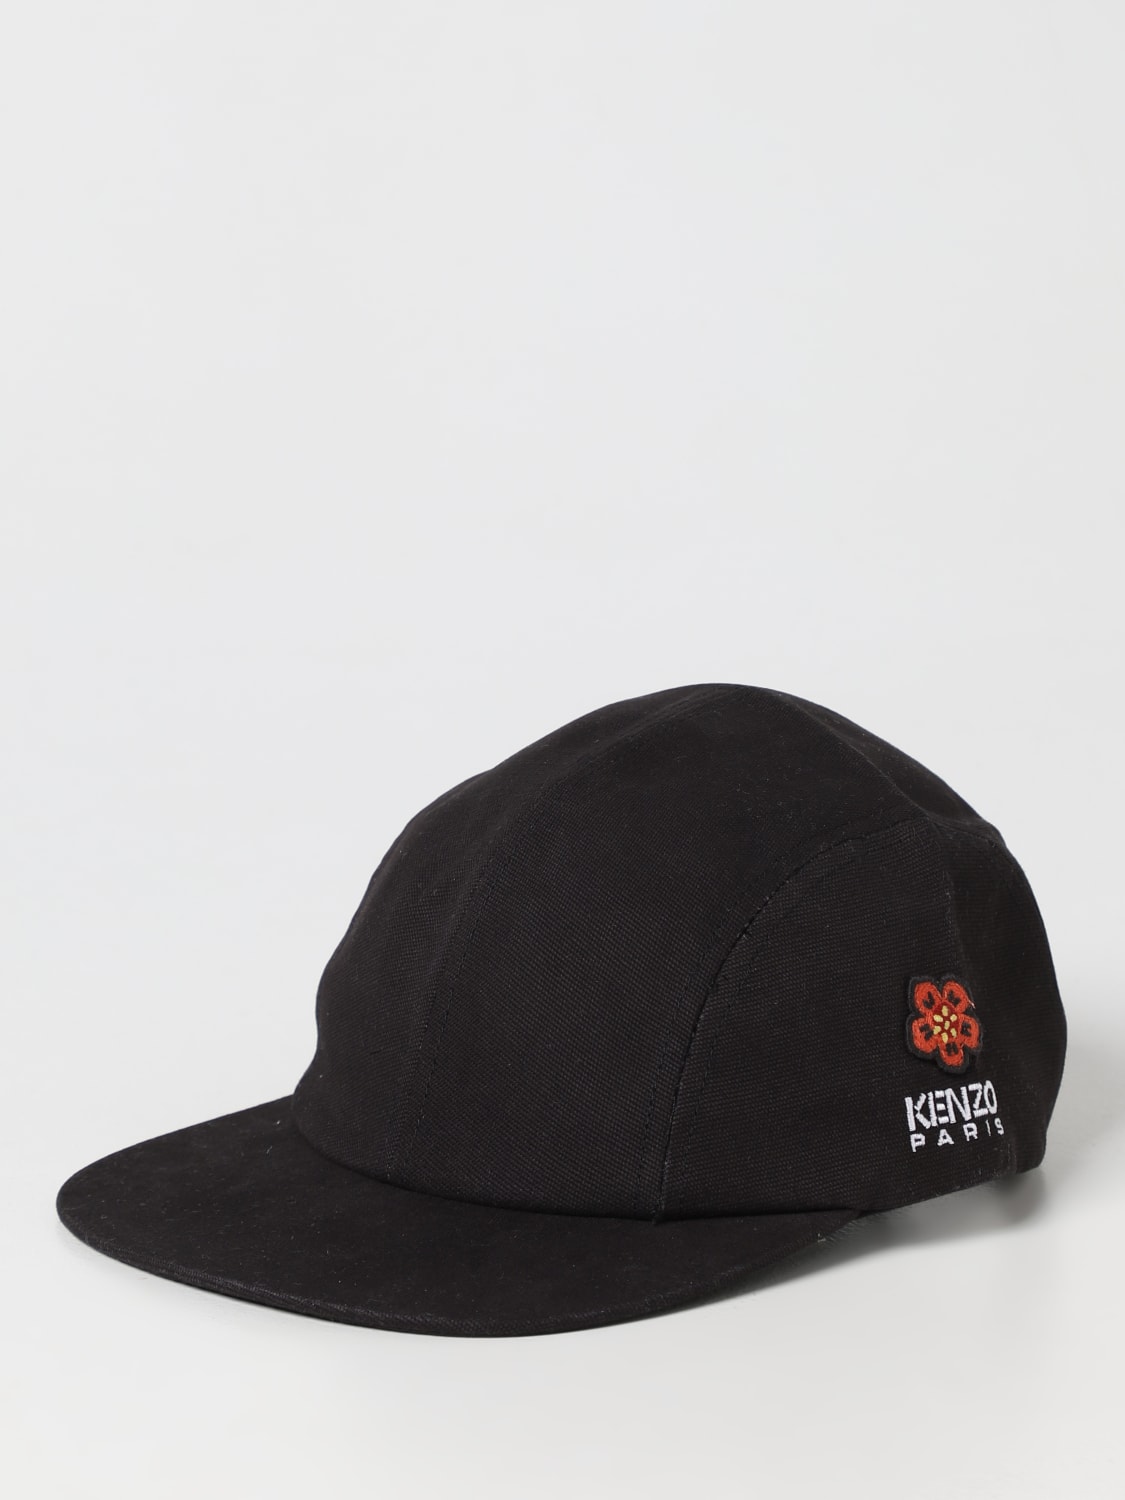 KENZO 帽子 ブラック - solutionfitness.com.br